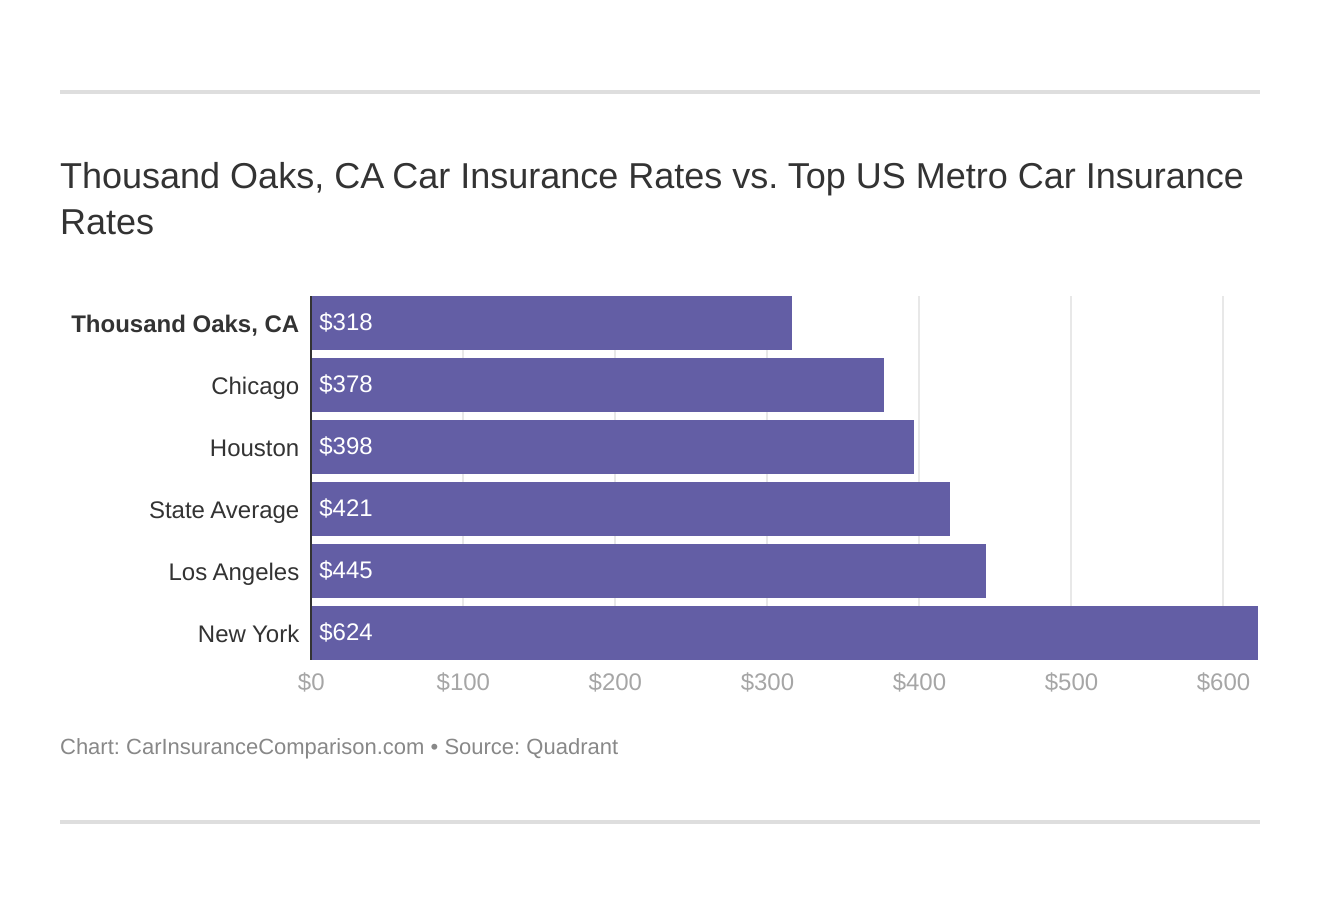 Thousand Oaks, CA Car Insurance Rates vs. Top US Metro Car Insurance Rates